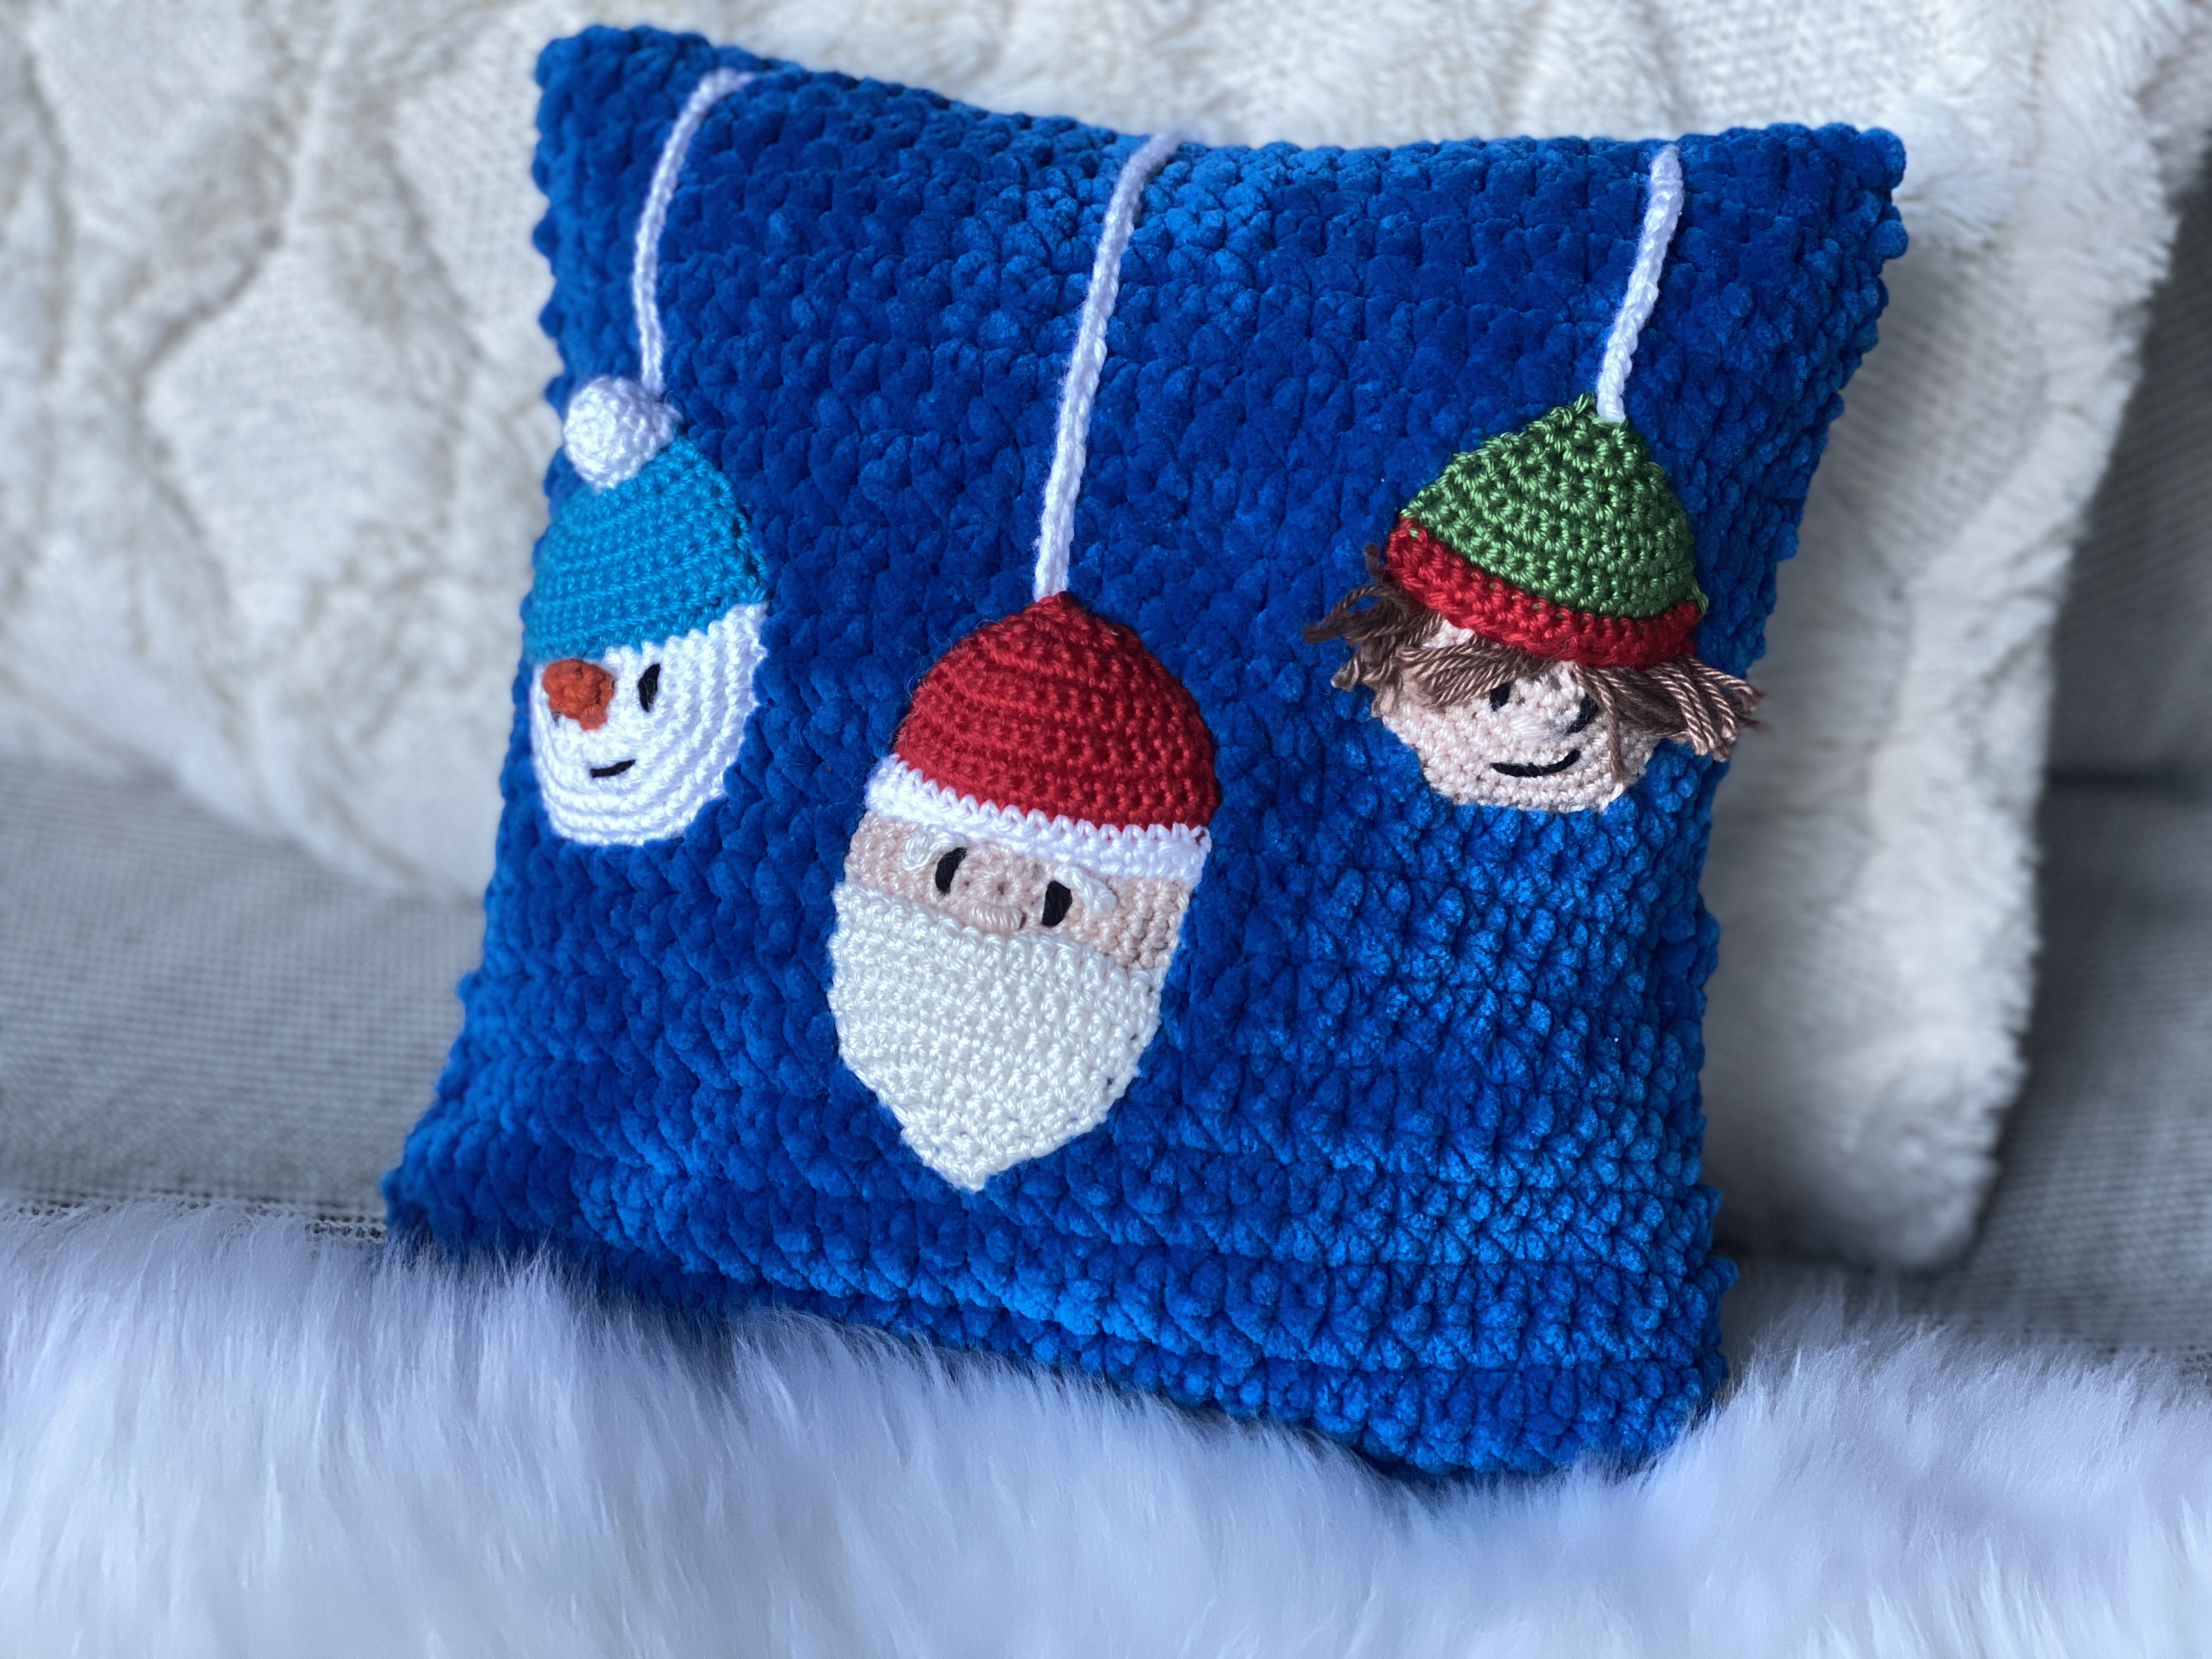 Pompom rug/chair seat cushion crochet pattern 064